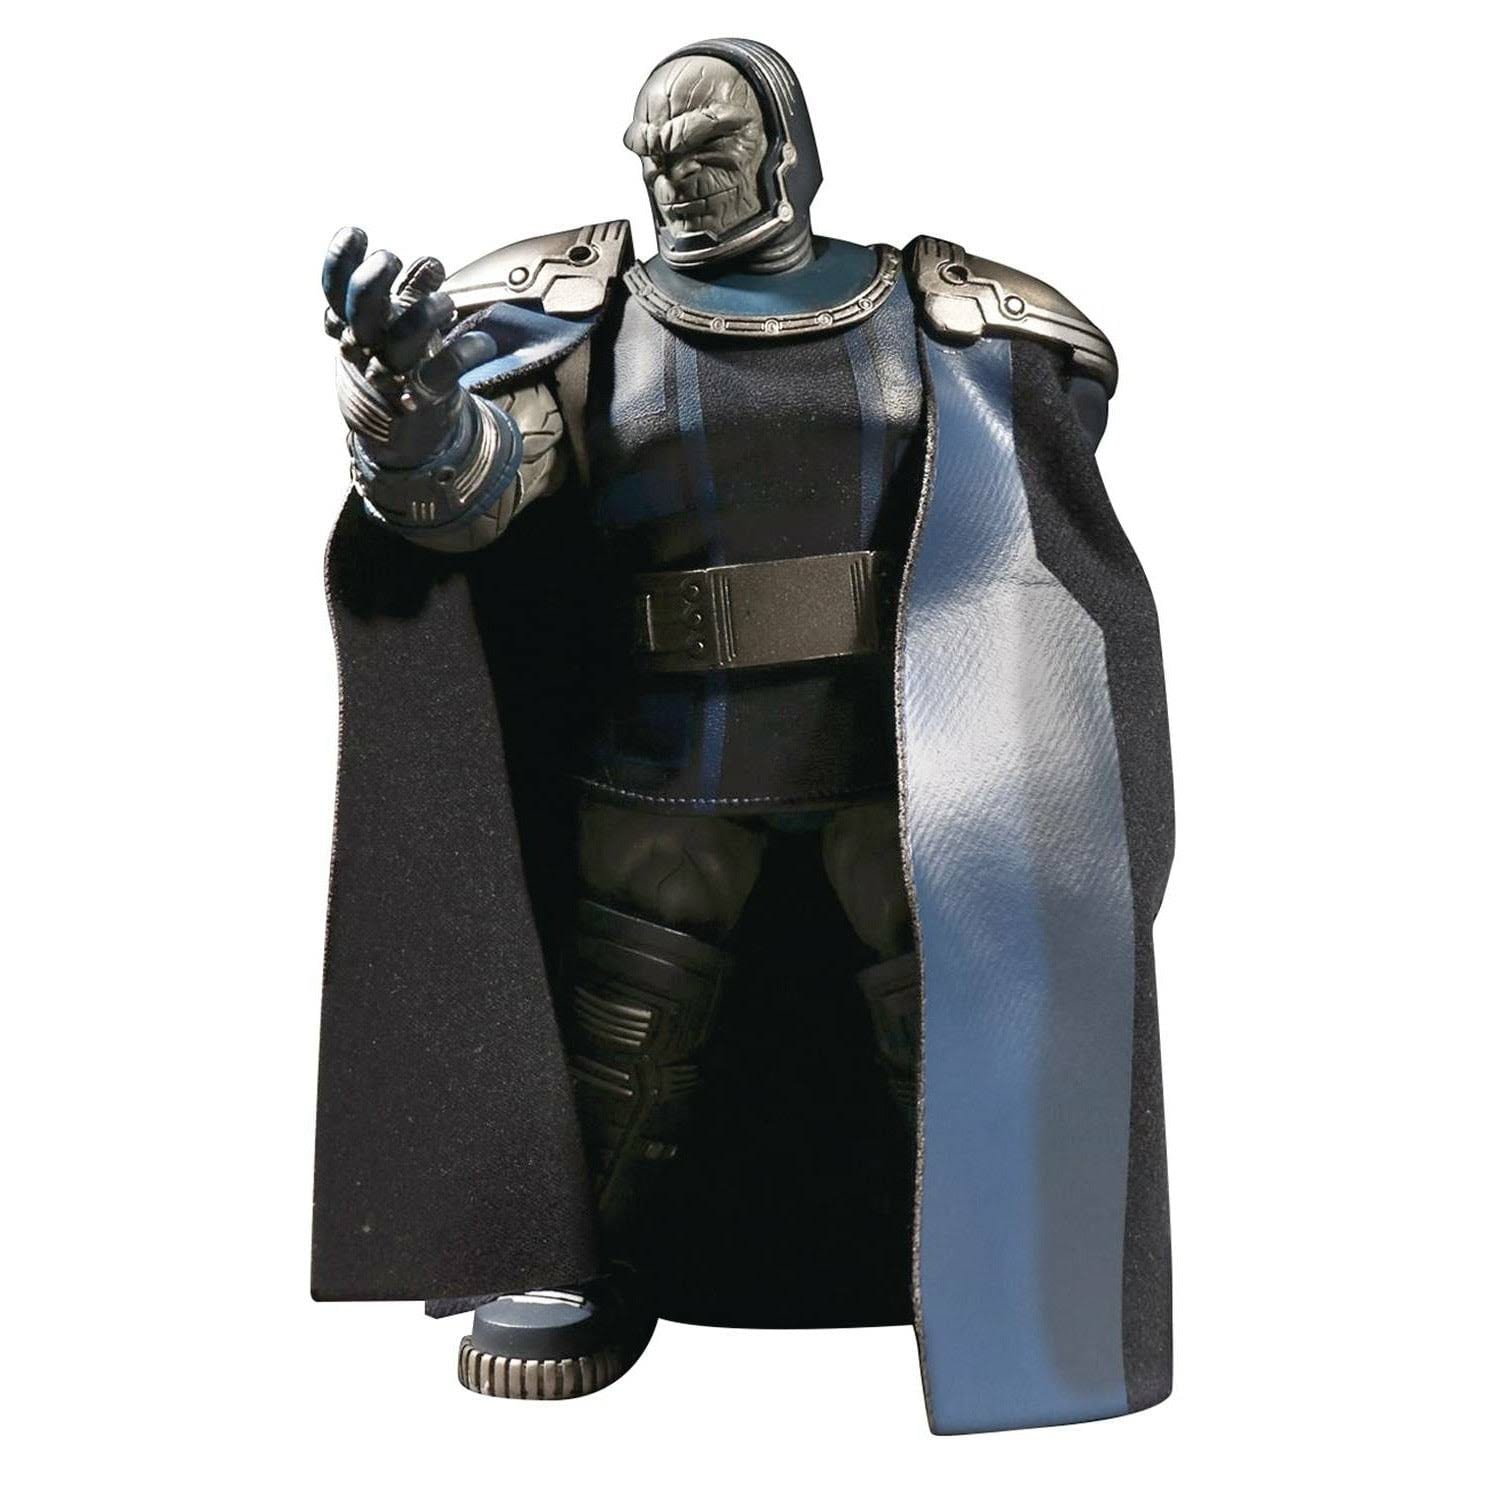 Mezco Toyz One:12 Collective DC Universe Darkseid Steel Boxed Action Figure